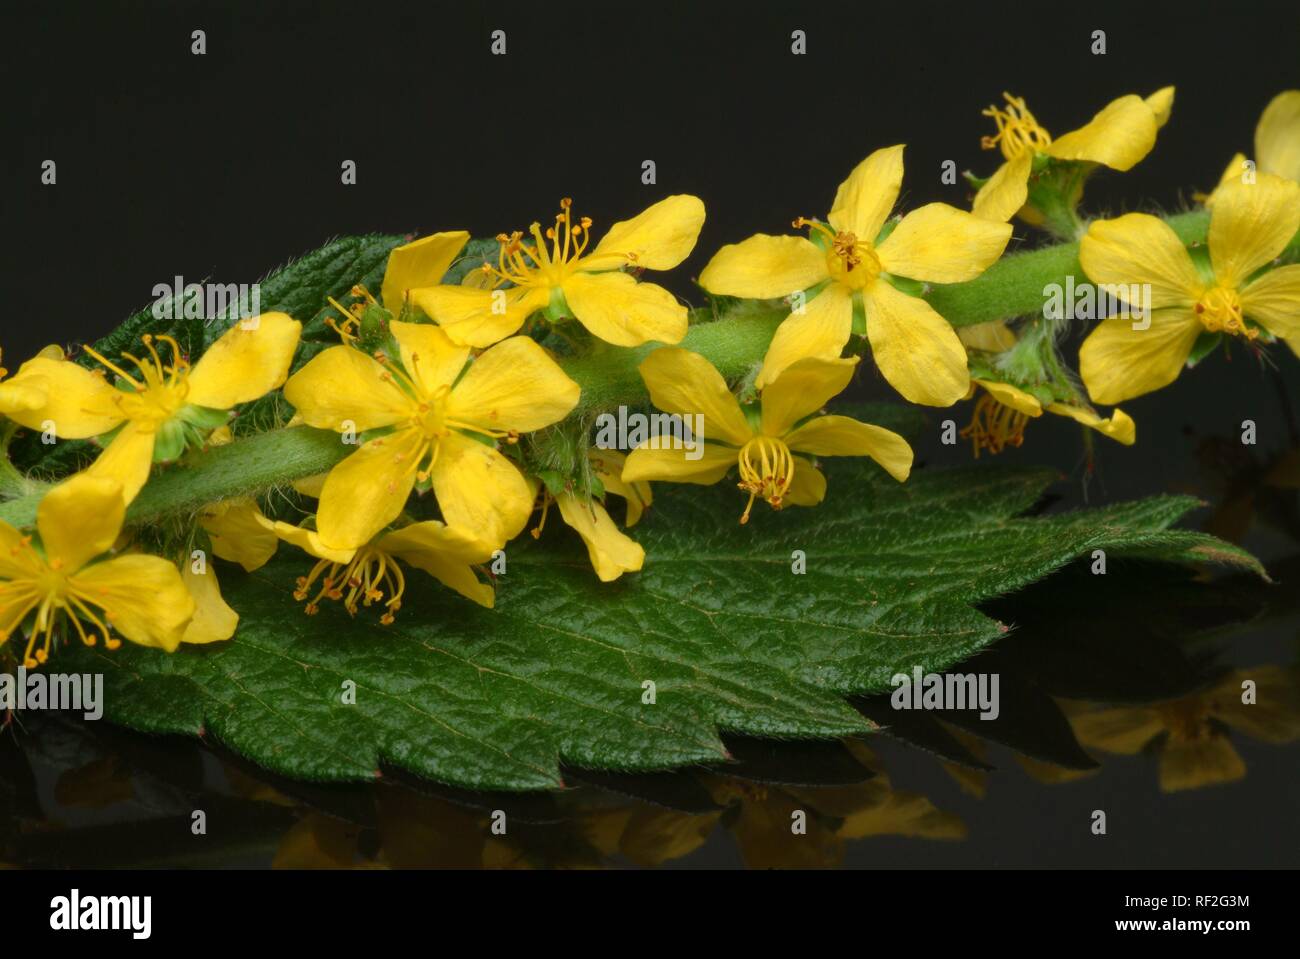 Common Agrimony, Church Steeples or Sticklewort (Agrimonia eupatoria), medicinal herb Stock Photo